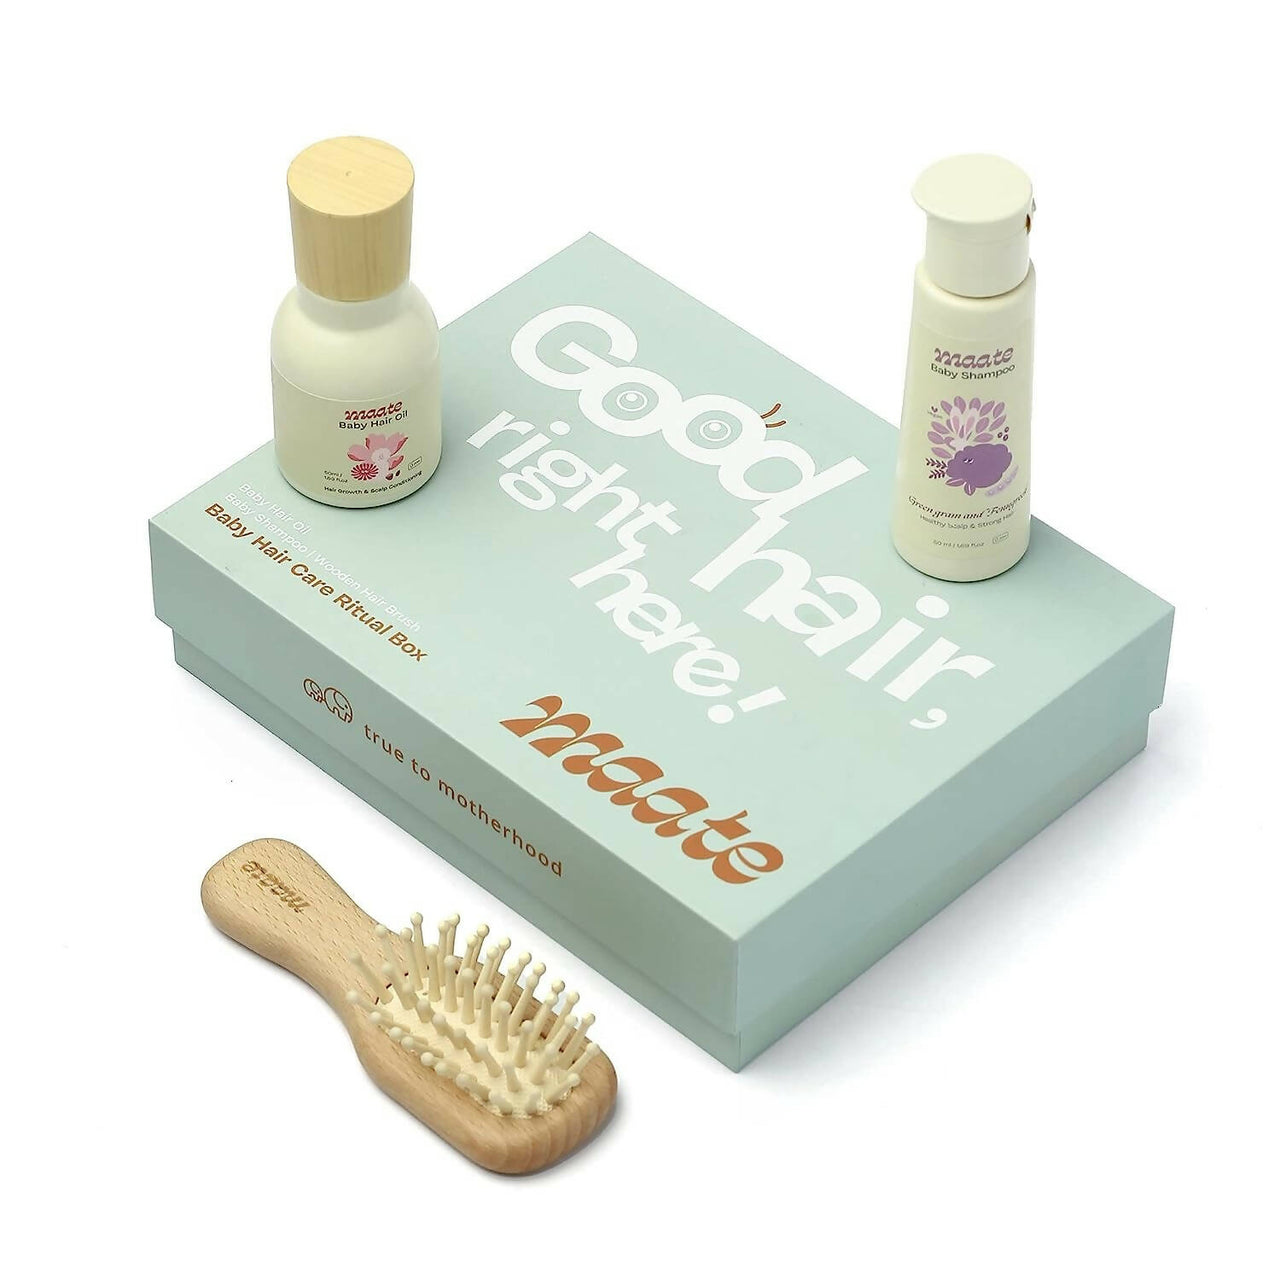 Maate Baby Hair Care Ritual Box | Baby Hair Care Kit - Distacart